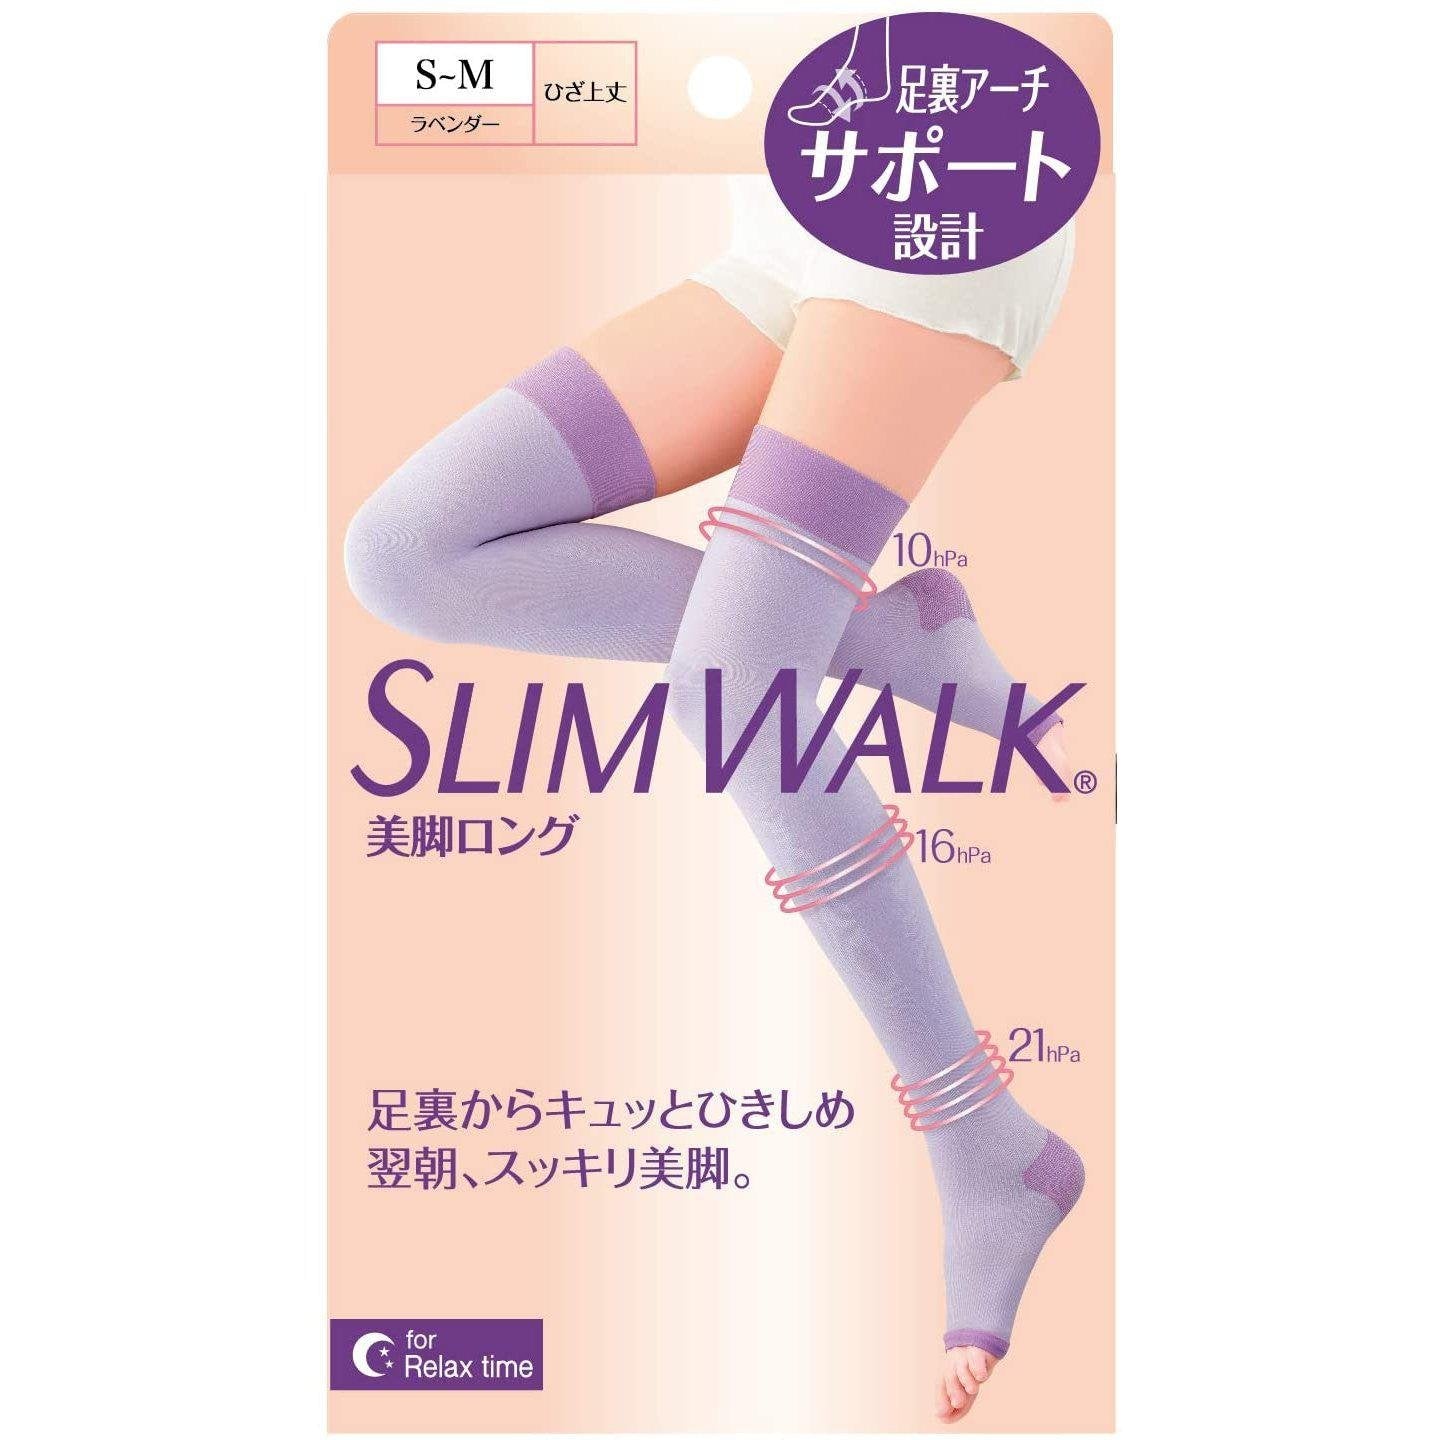 P-1-SLW-SLS-SM-1-Slim Walk Slimming Compression Long Socks Lavender Size S-M.jpg